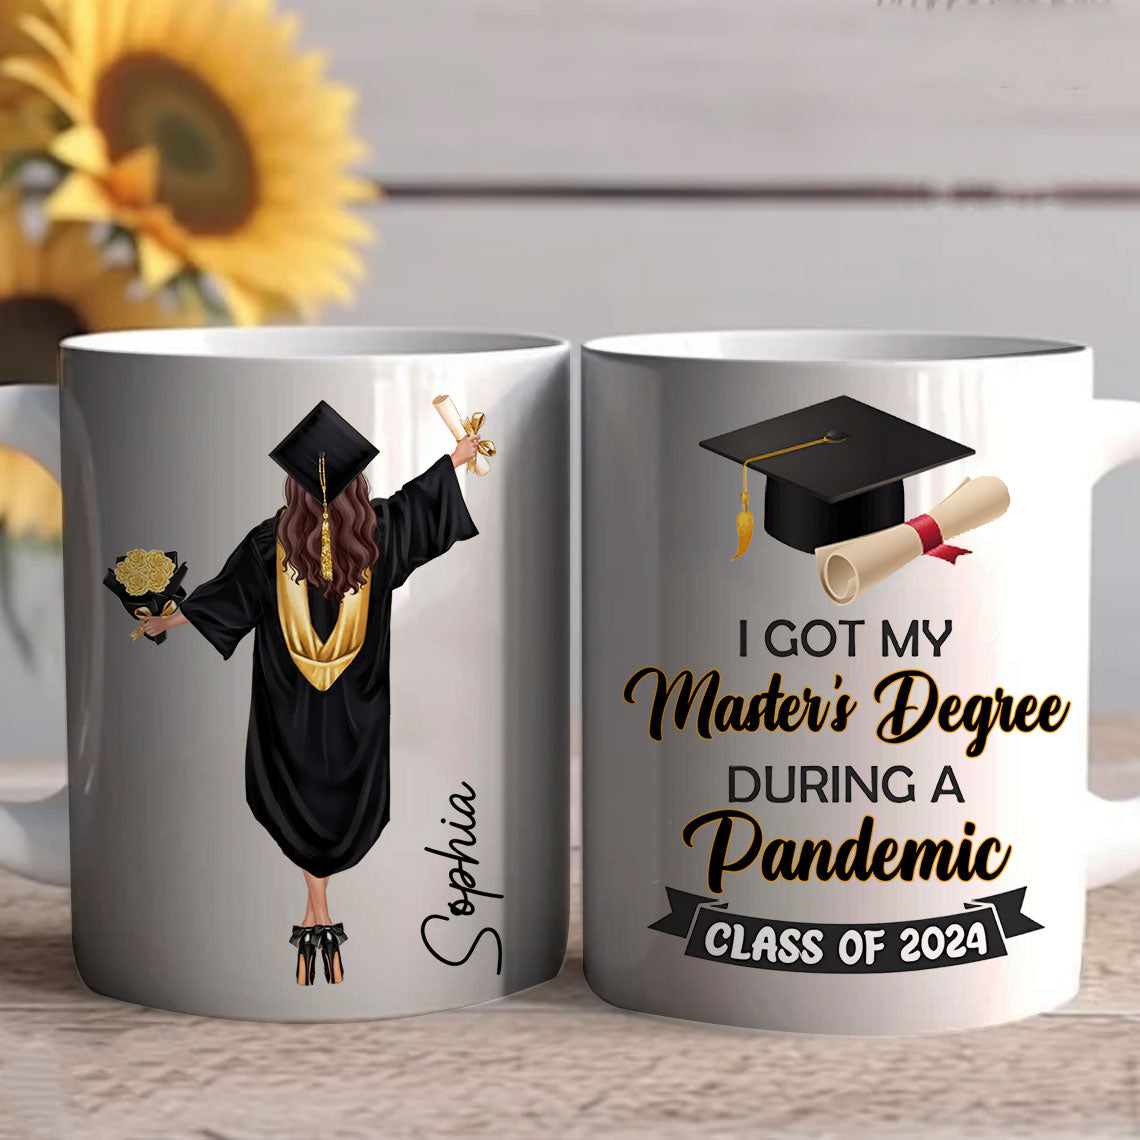 I Got My Degree - Custom Appearance And Texts, Personalized White Mug, Graduation Gift